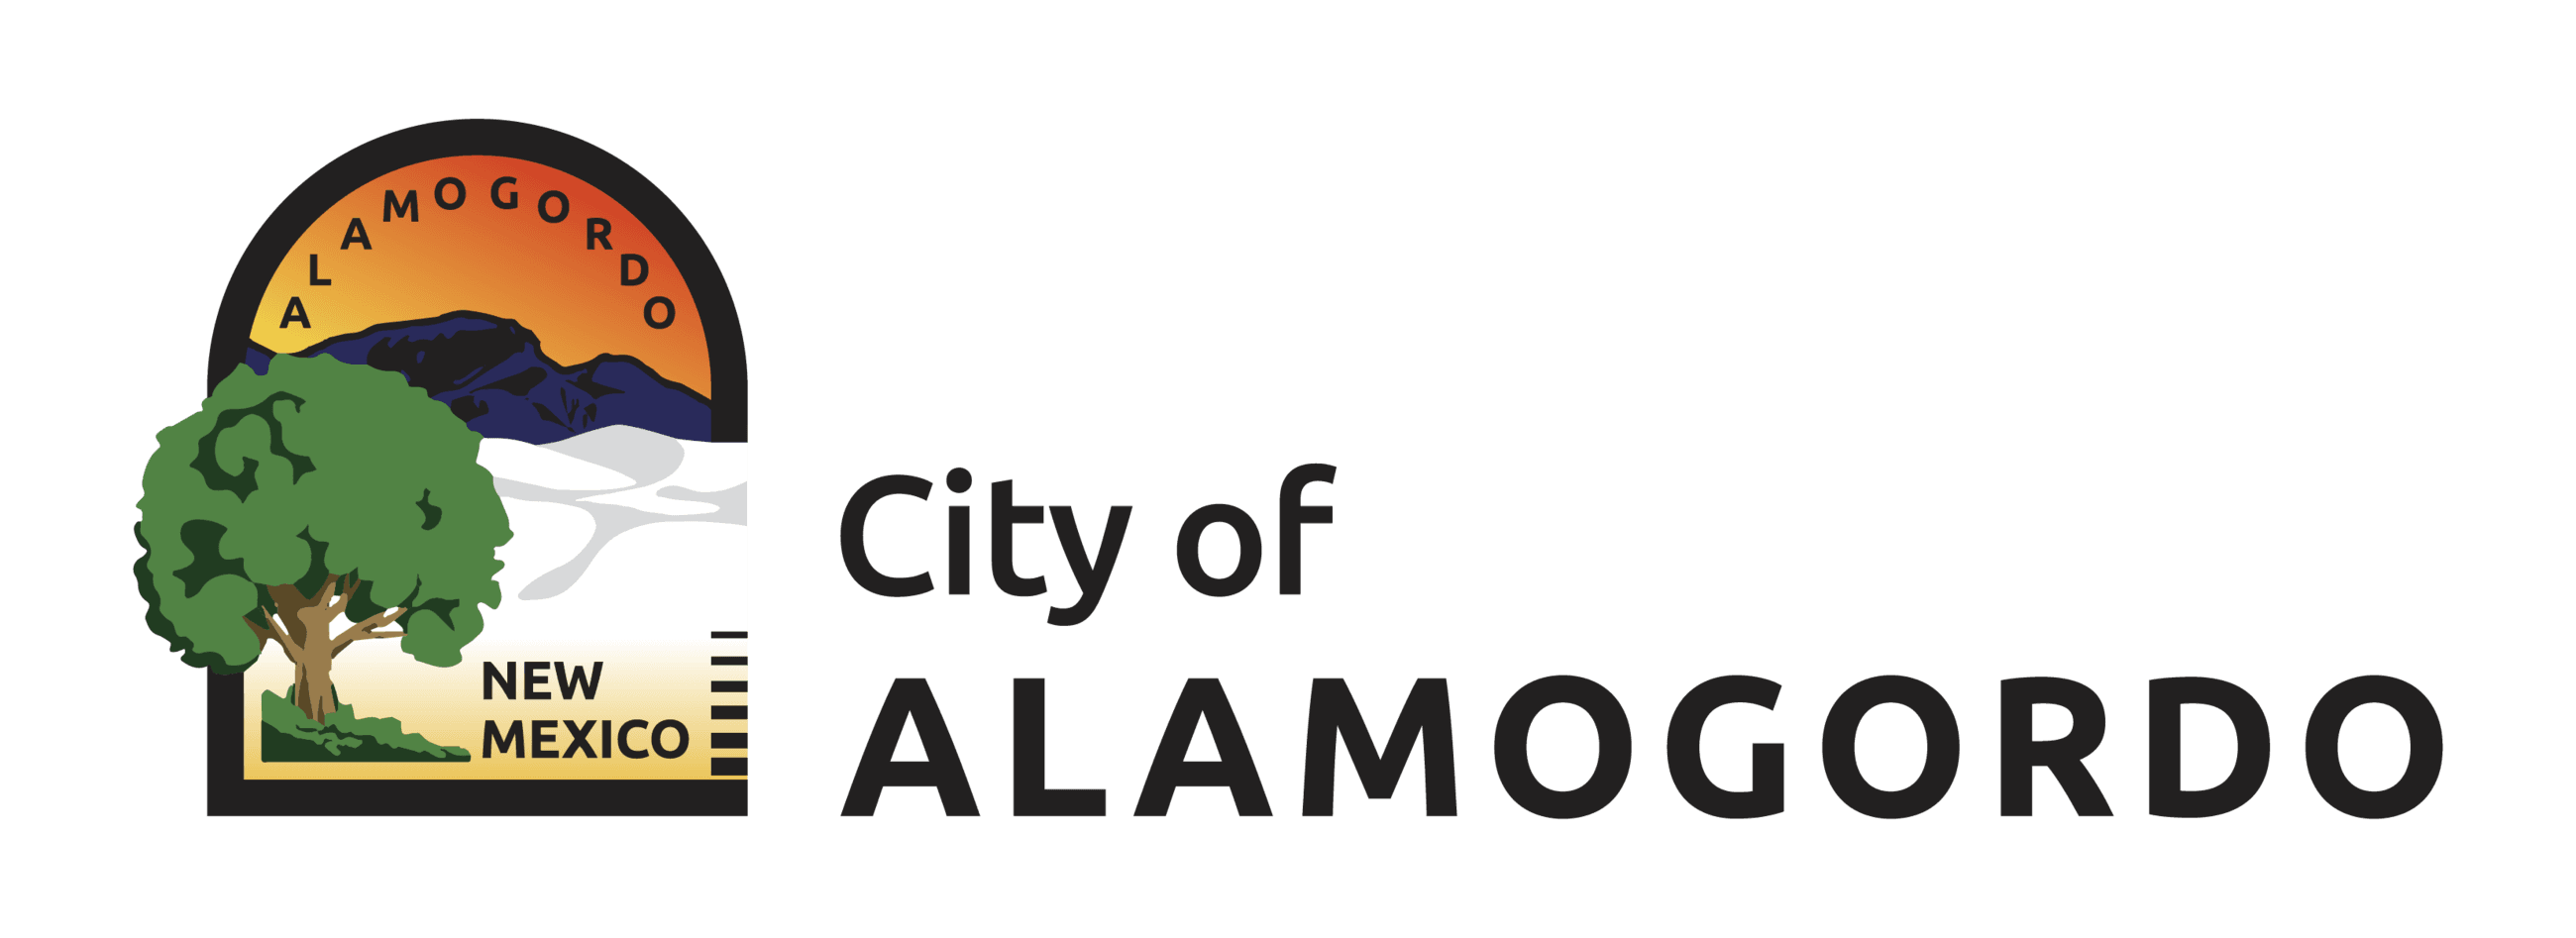 City of Alamogordo, NM Logo